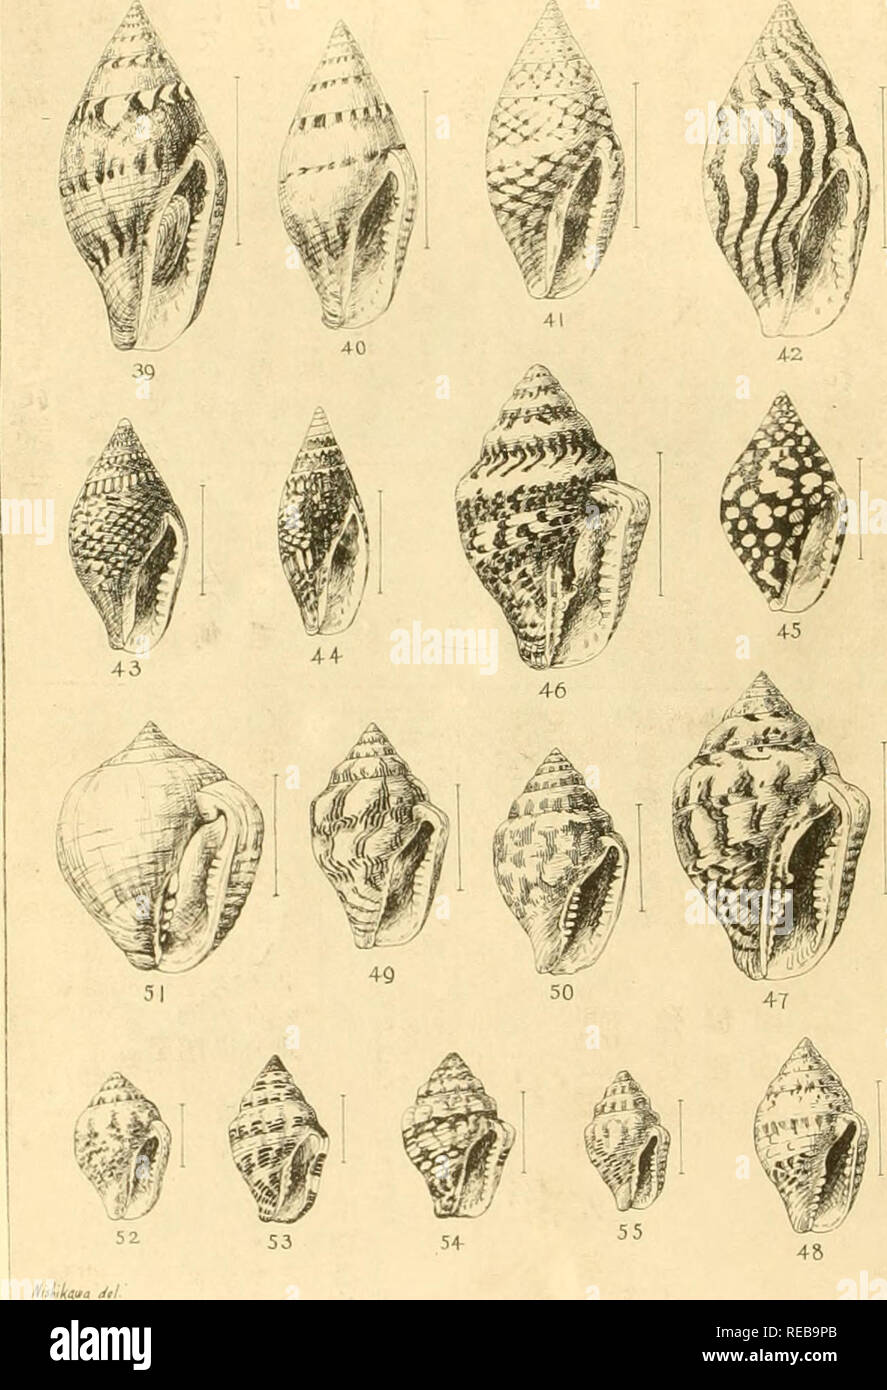 . The Conchological magazine. Mollusks. THE CONGHOLOQiGAL MAQAZINE VOL. III. PL X.çåç¬¬å·ä¸ç¬¬èªéé¡ä» JAPANESE MARINE MOLLUSKS (PL. XLVIII.) (fRå «ååç¬¬ï¼é®ä»ç£æµ·é¦æ¬ Columbella versicolor Sowerby. I&quot; CoUiãnl&gt;ella yiardalina tyleriãray C- pardalina japonlea Rvc- C- fartlallna siibcrilraiia I'ils. Coluinbc'Ufi panlalina Lamfirck 42. 43. 44. 45. 46-' 48. 49. 50. 51. 52. C- versicolor coronatft Duclos'?) Colunihella turturina Lamarck. 0. turturina borealis I'lls- 53, 51&quot;ï¼55. Colarabella varians Sowerliy. Please note that these images are extracted from scanned page images that may  Stock Photo